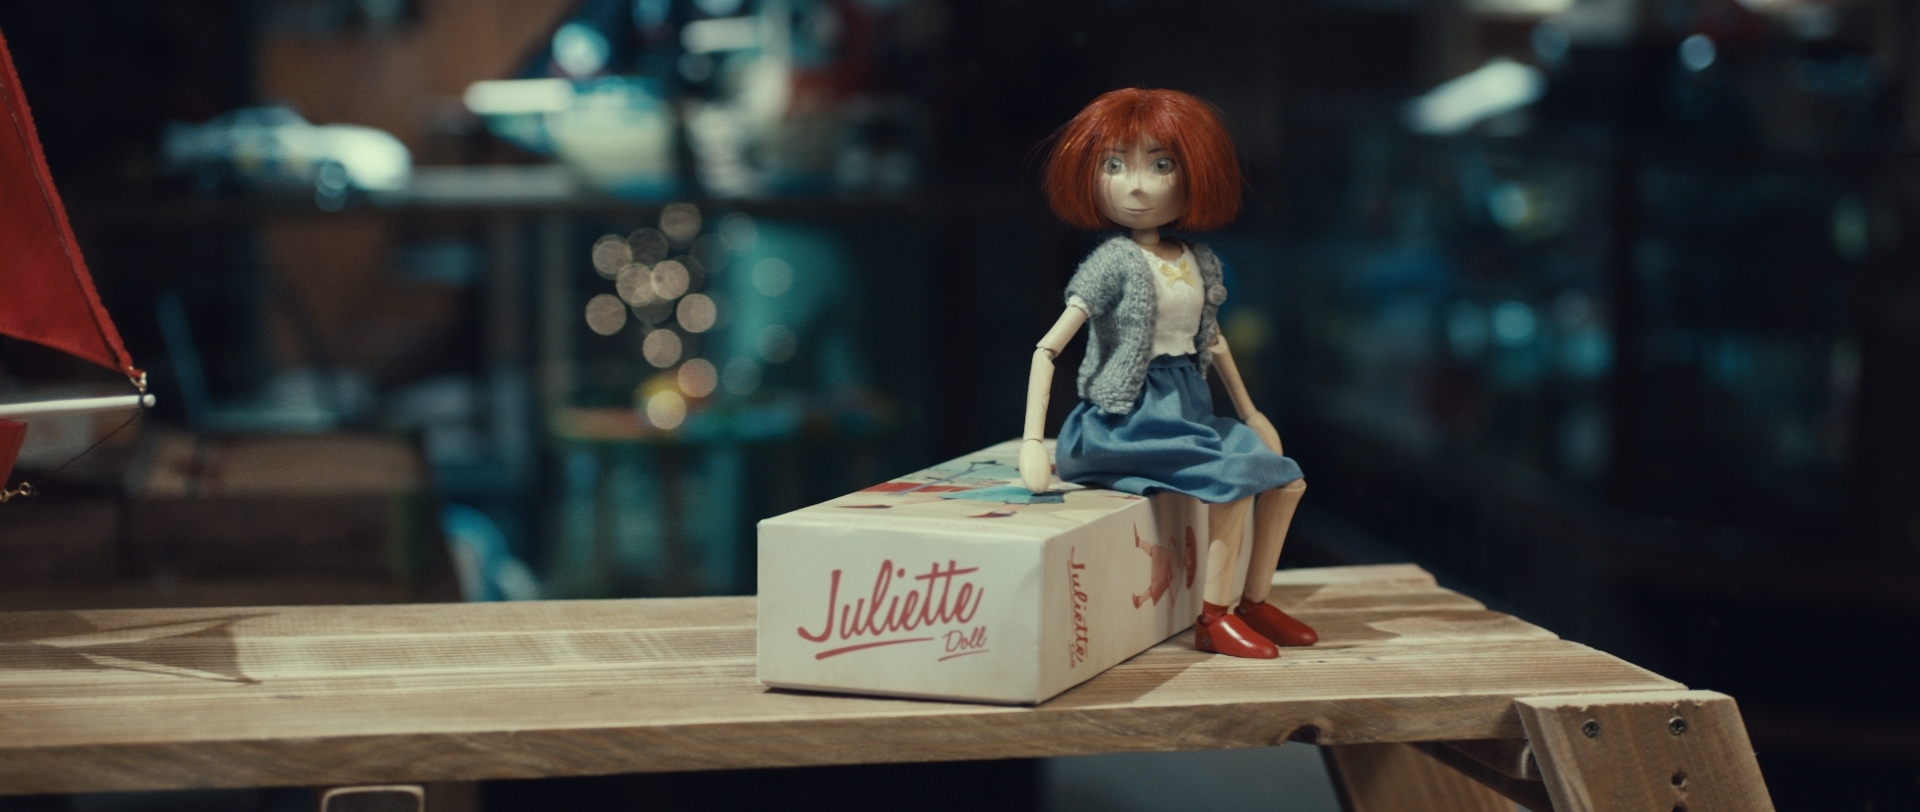 McDonalds Juliette Doll Christmas